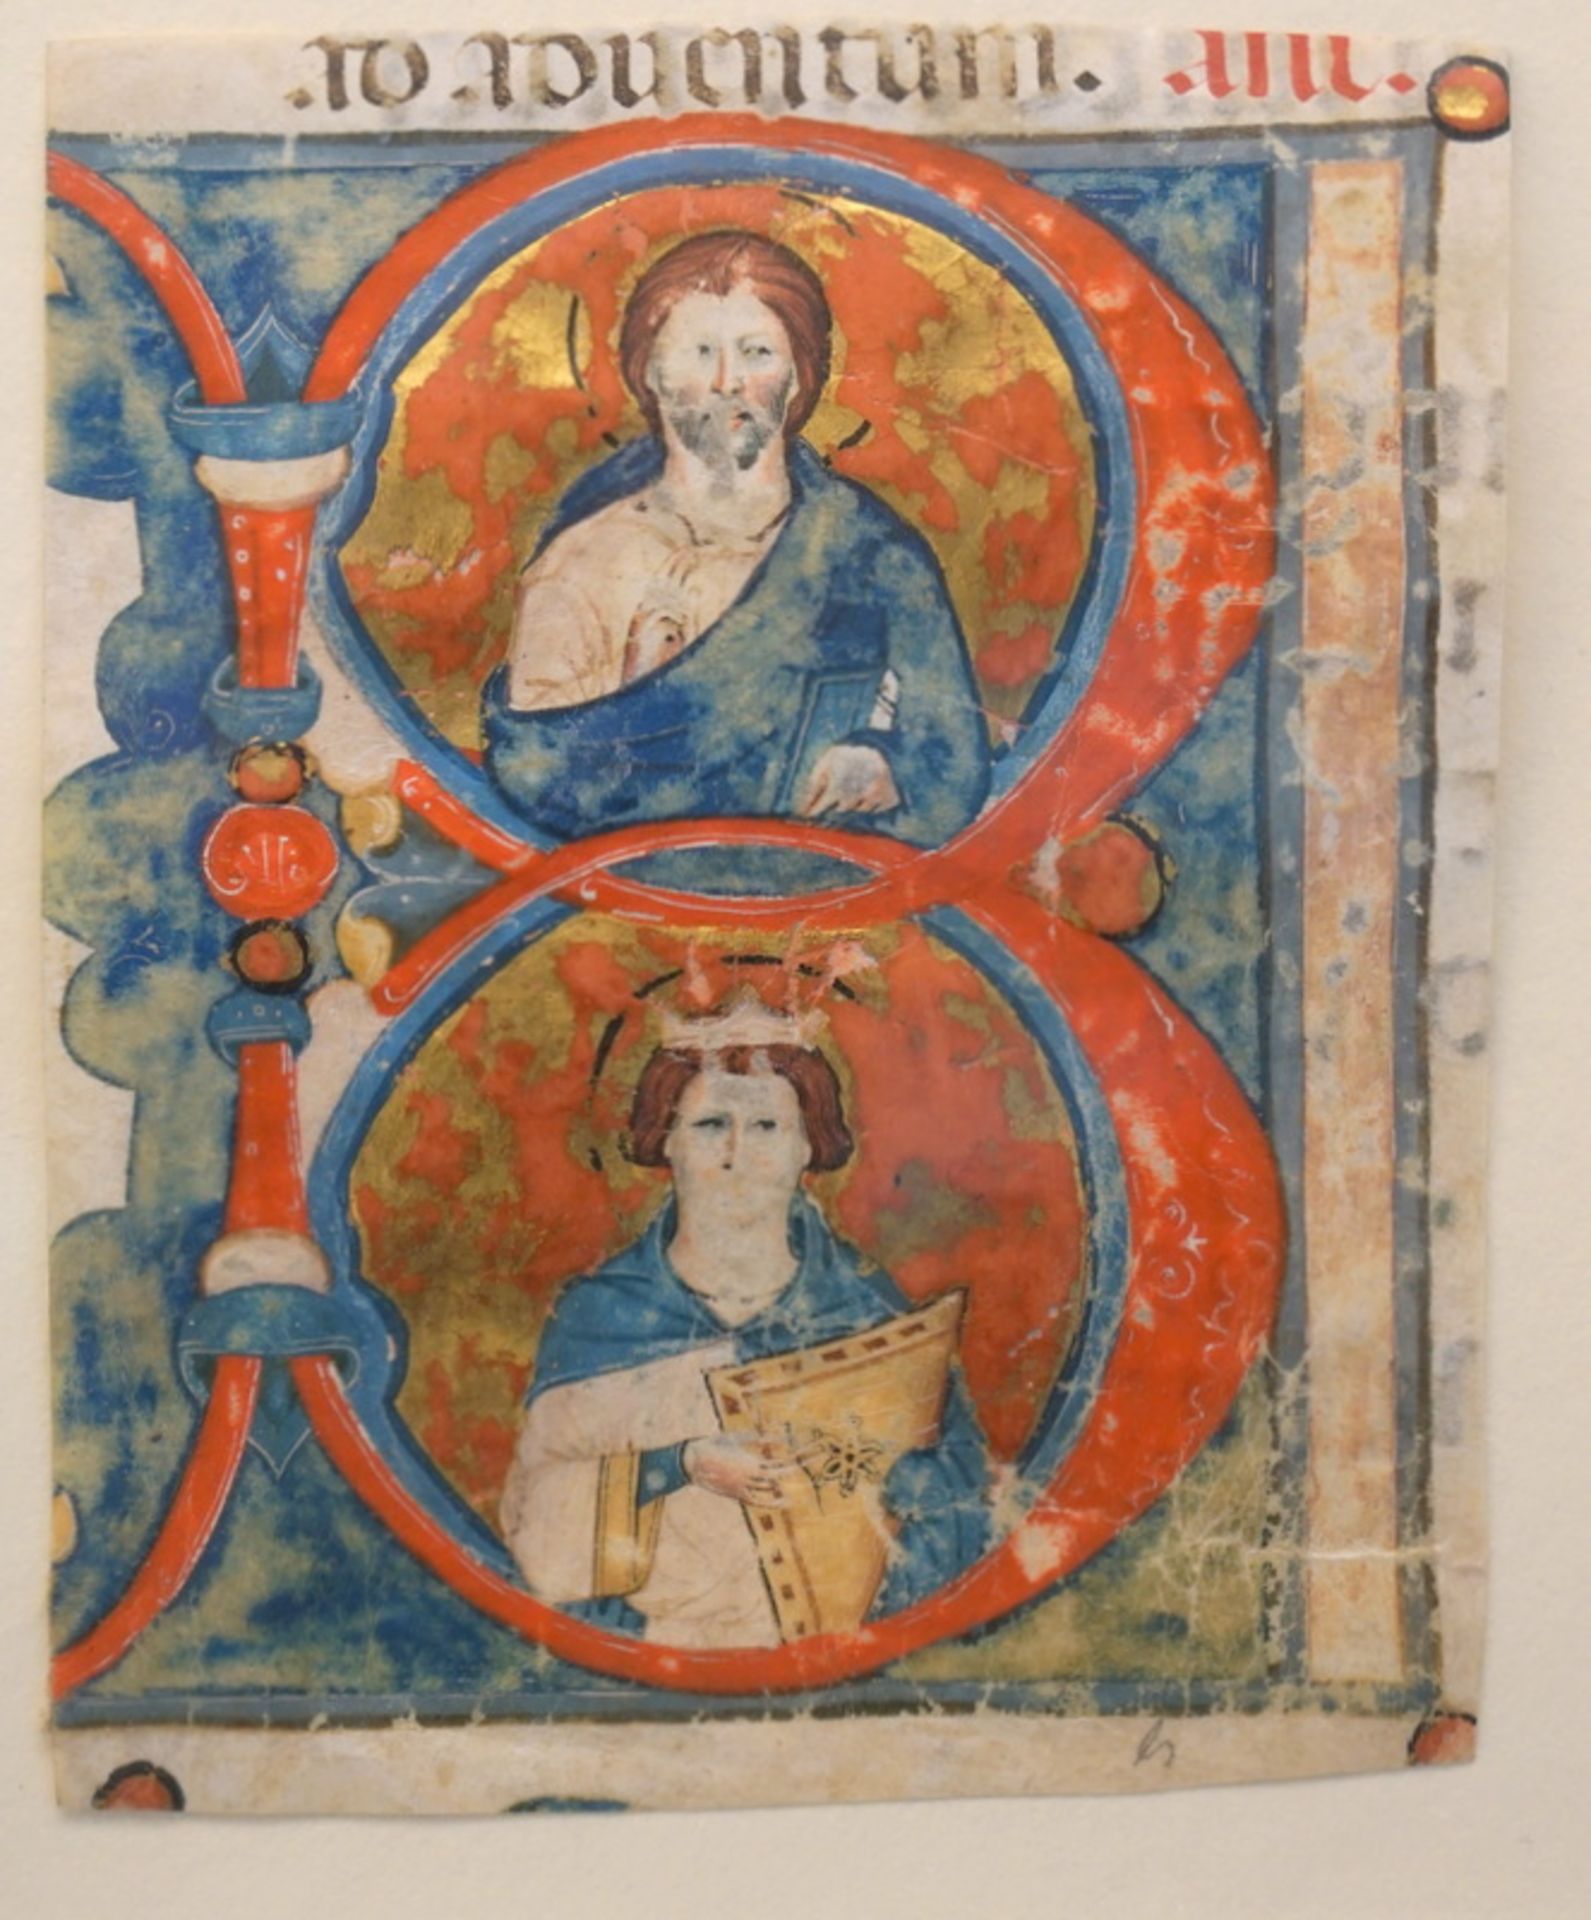 Pergament mit Majuskel B: Christus und König David - 14. Jh